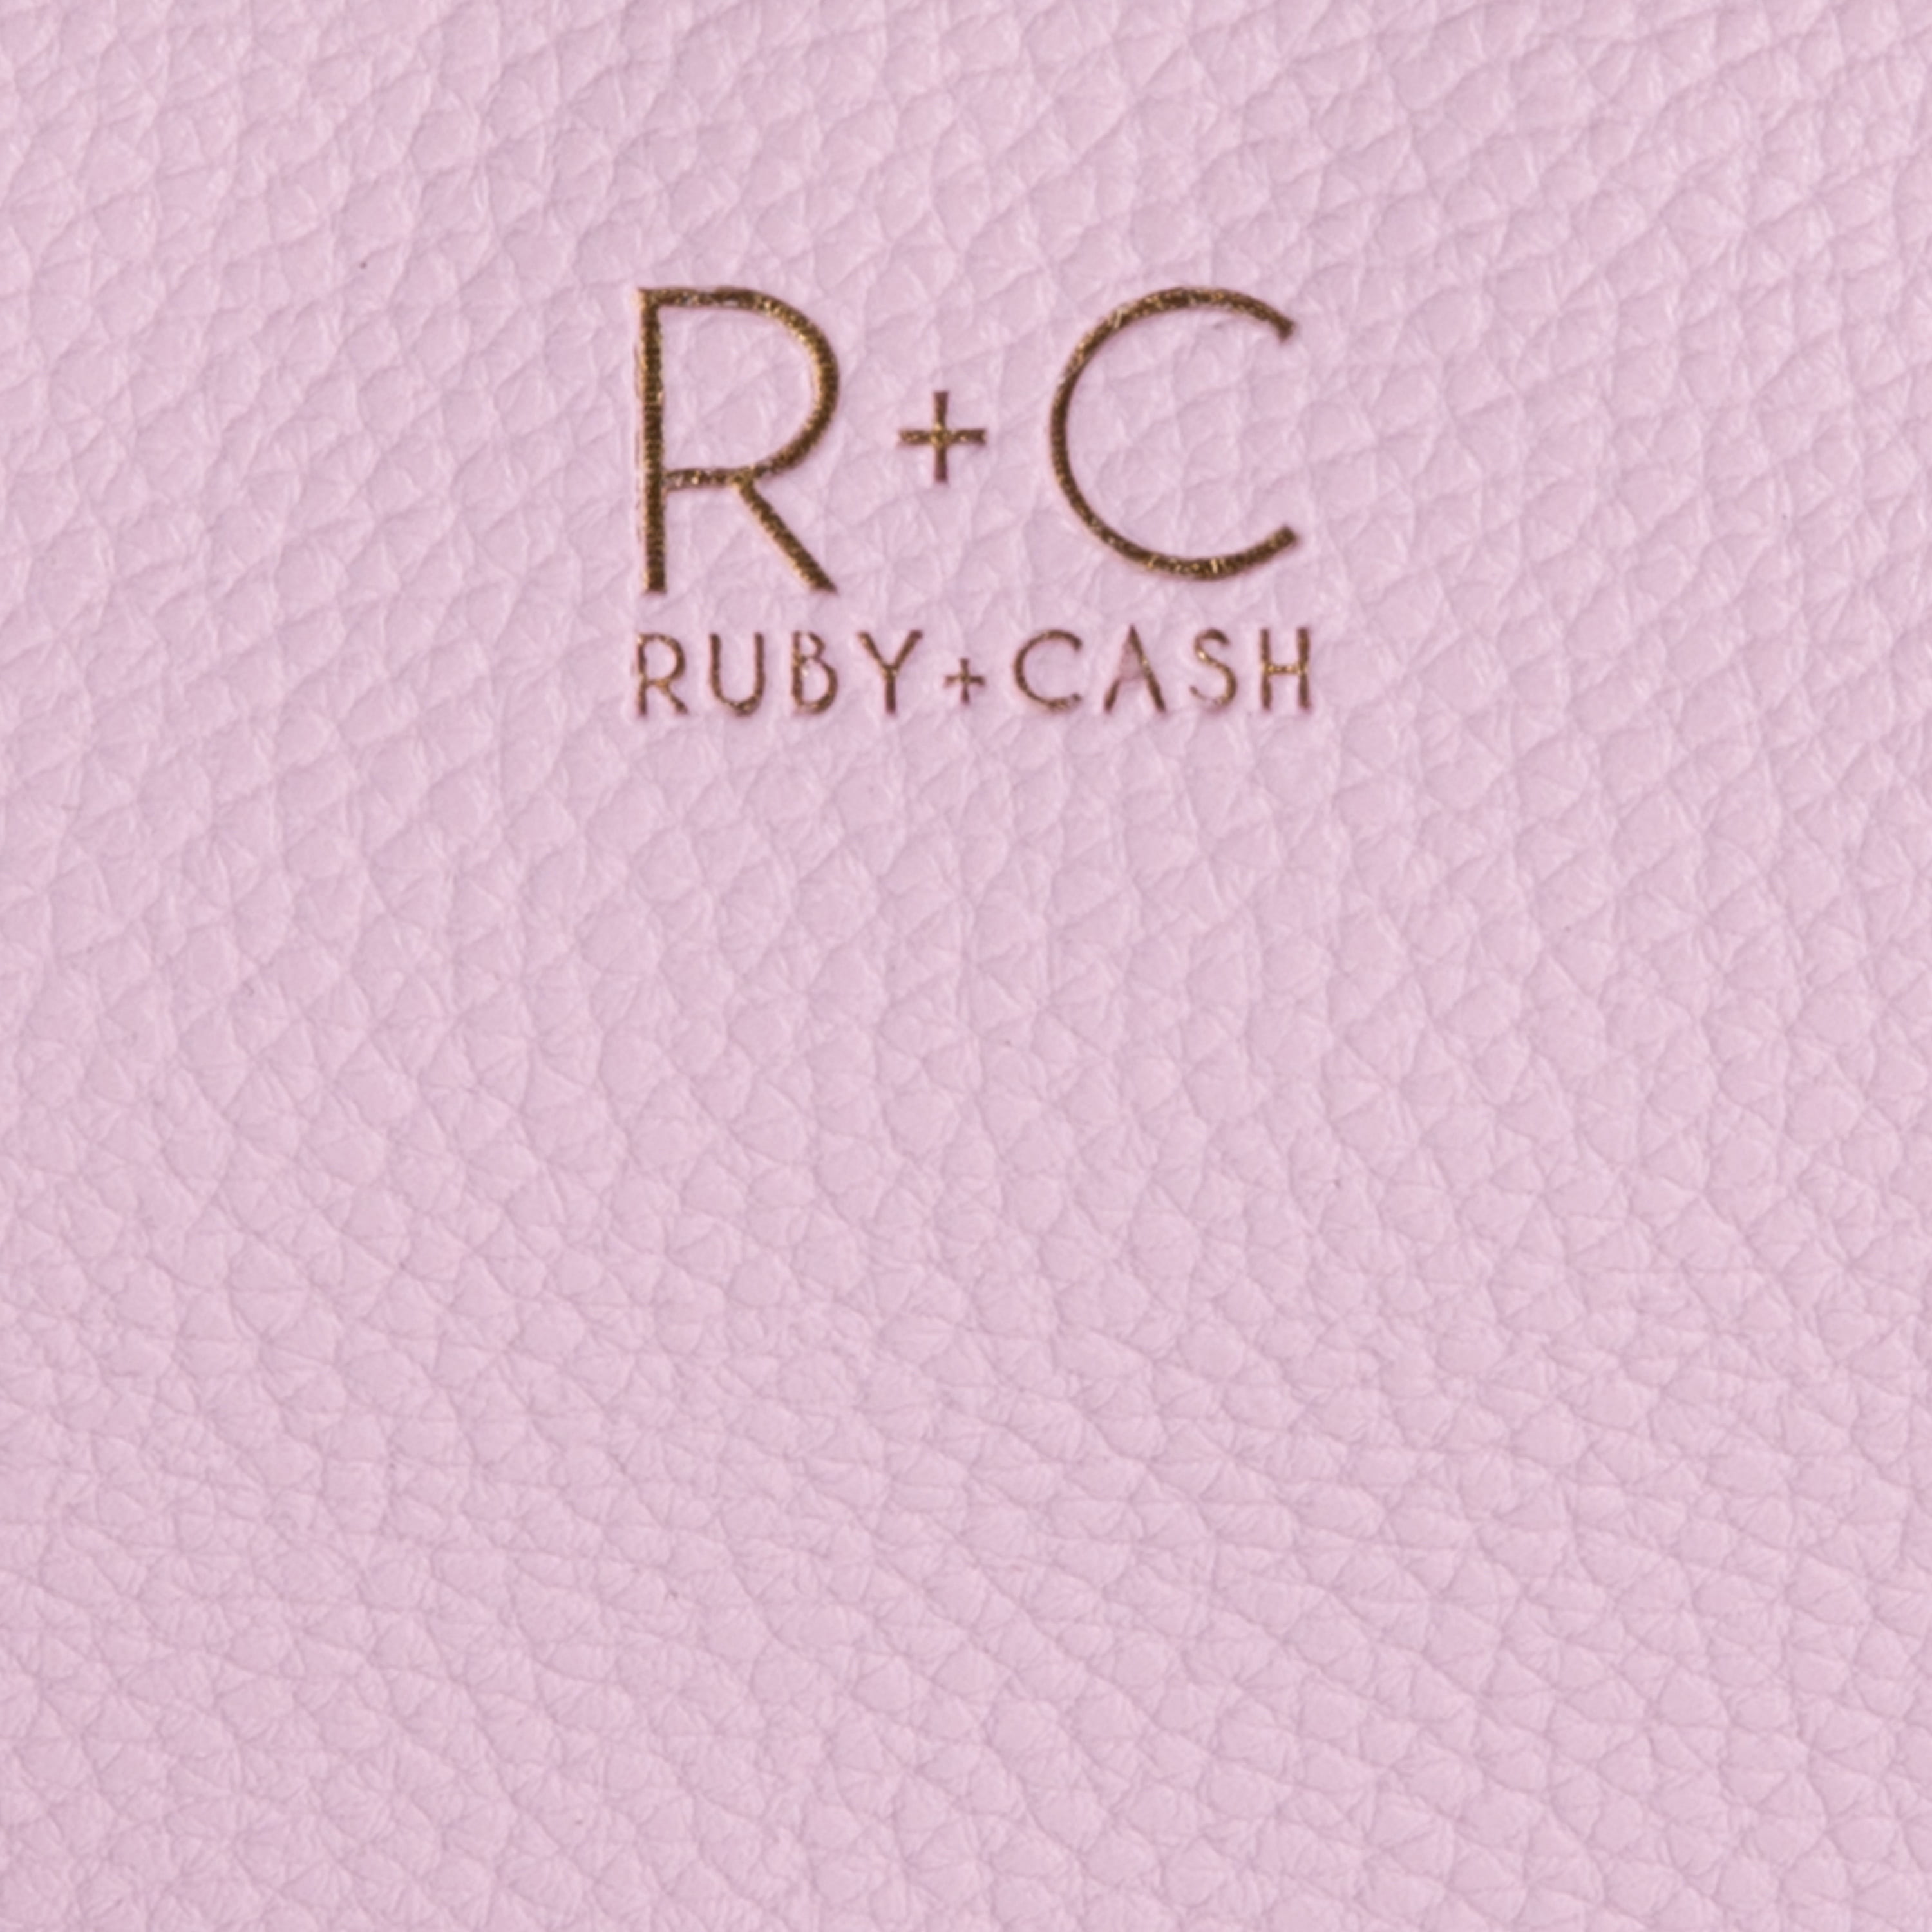 Ruby+Cash Faux Leather Makeup Bag & Organizer - Inspire Cascading Dots  6.5x9.0 